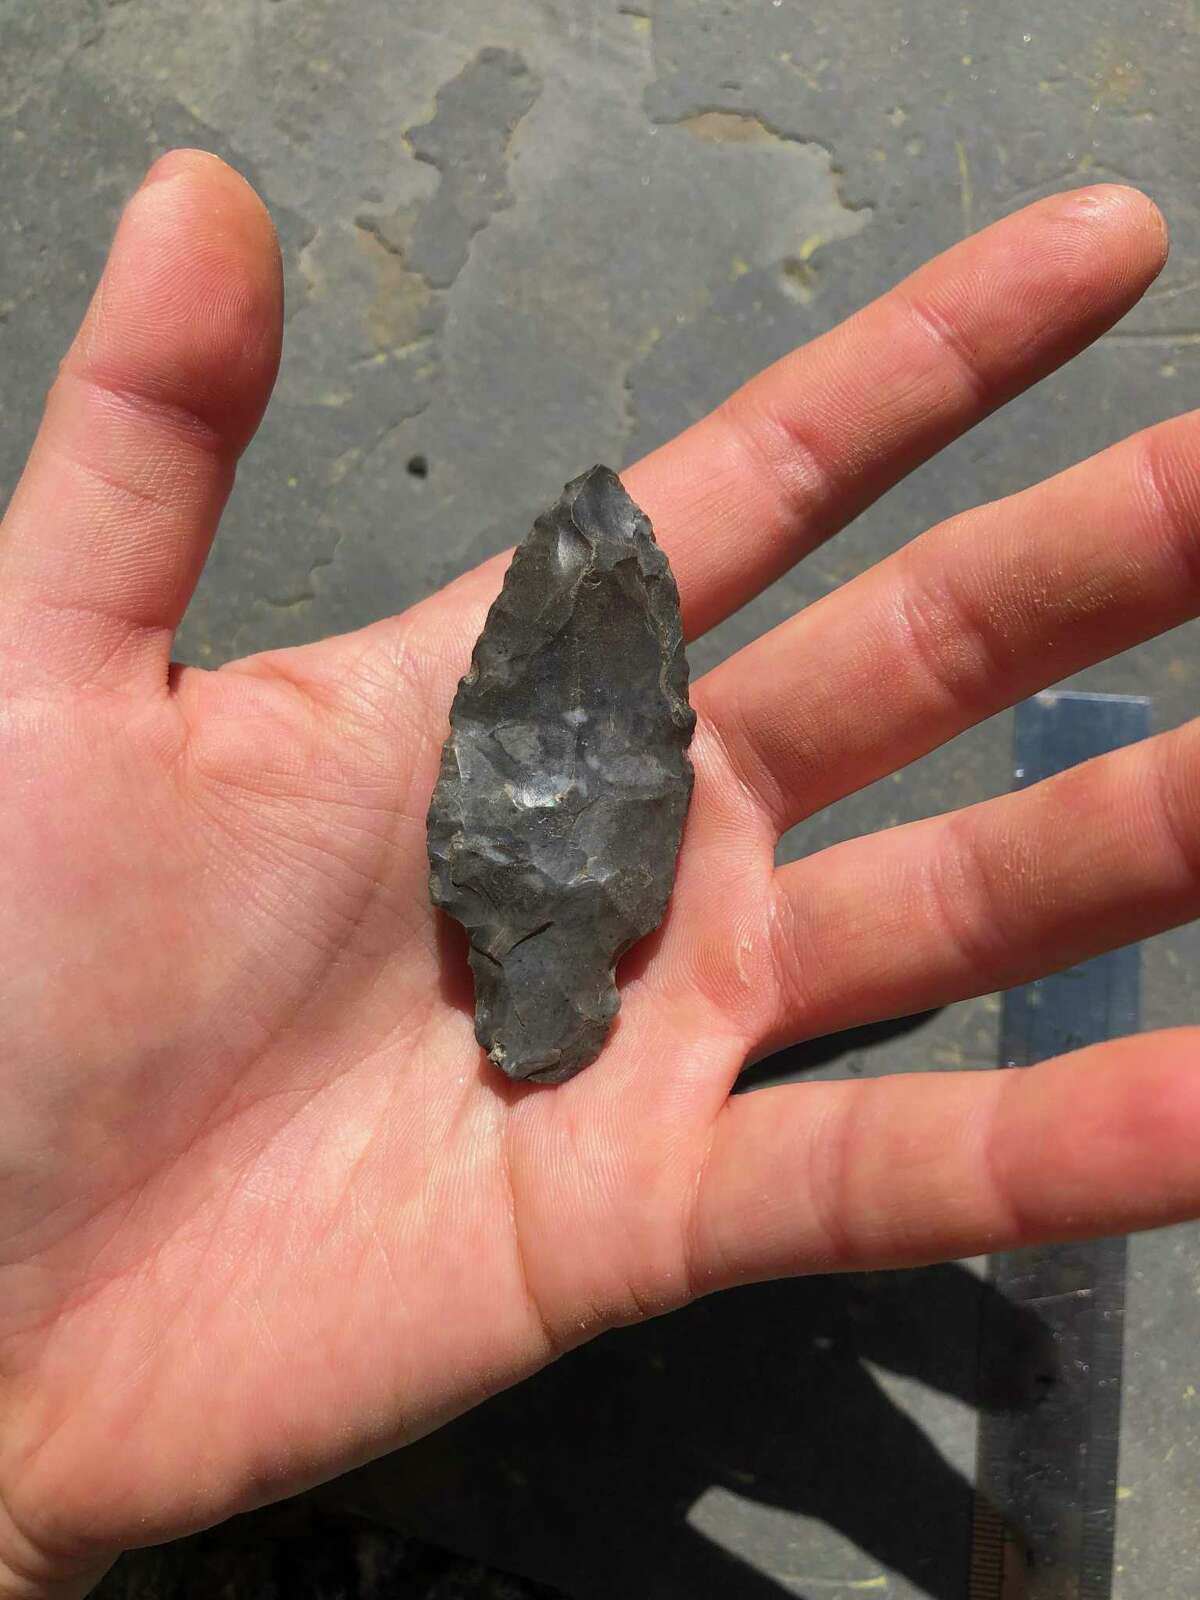 An arrowhead found in the backyard of a home in Monroe